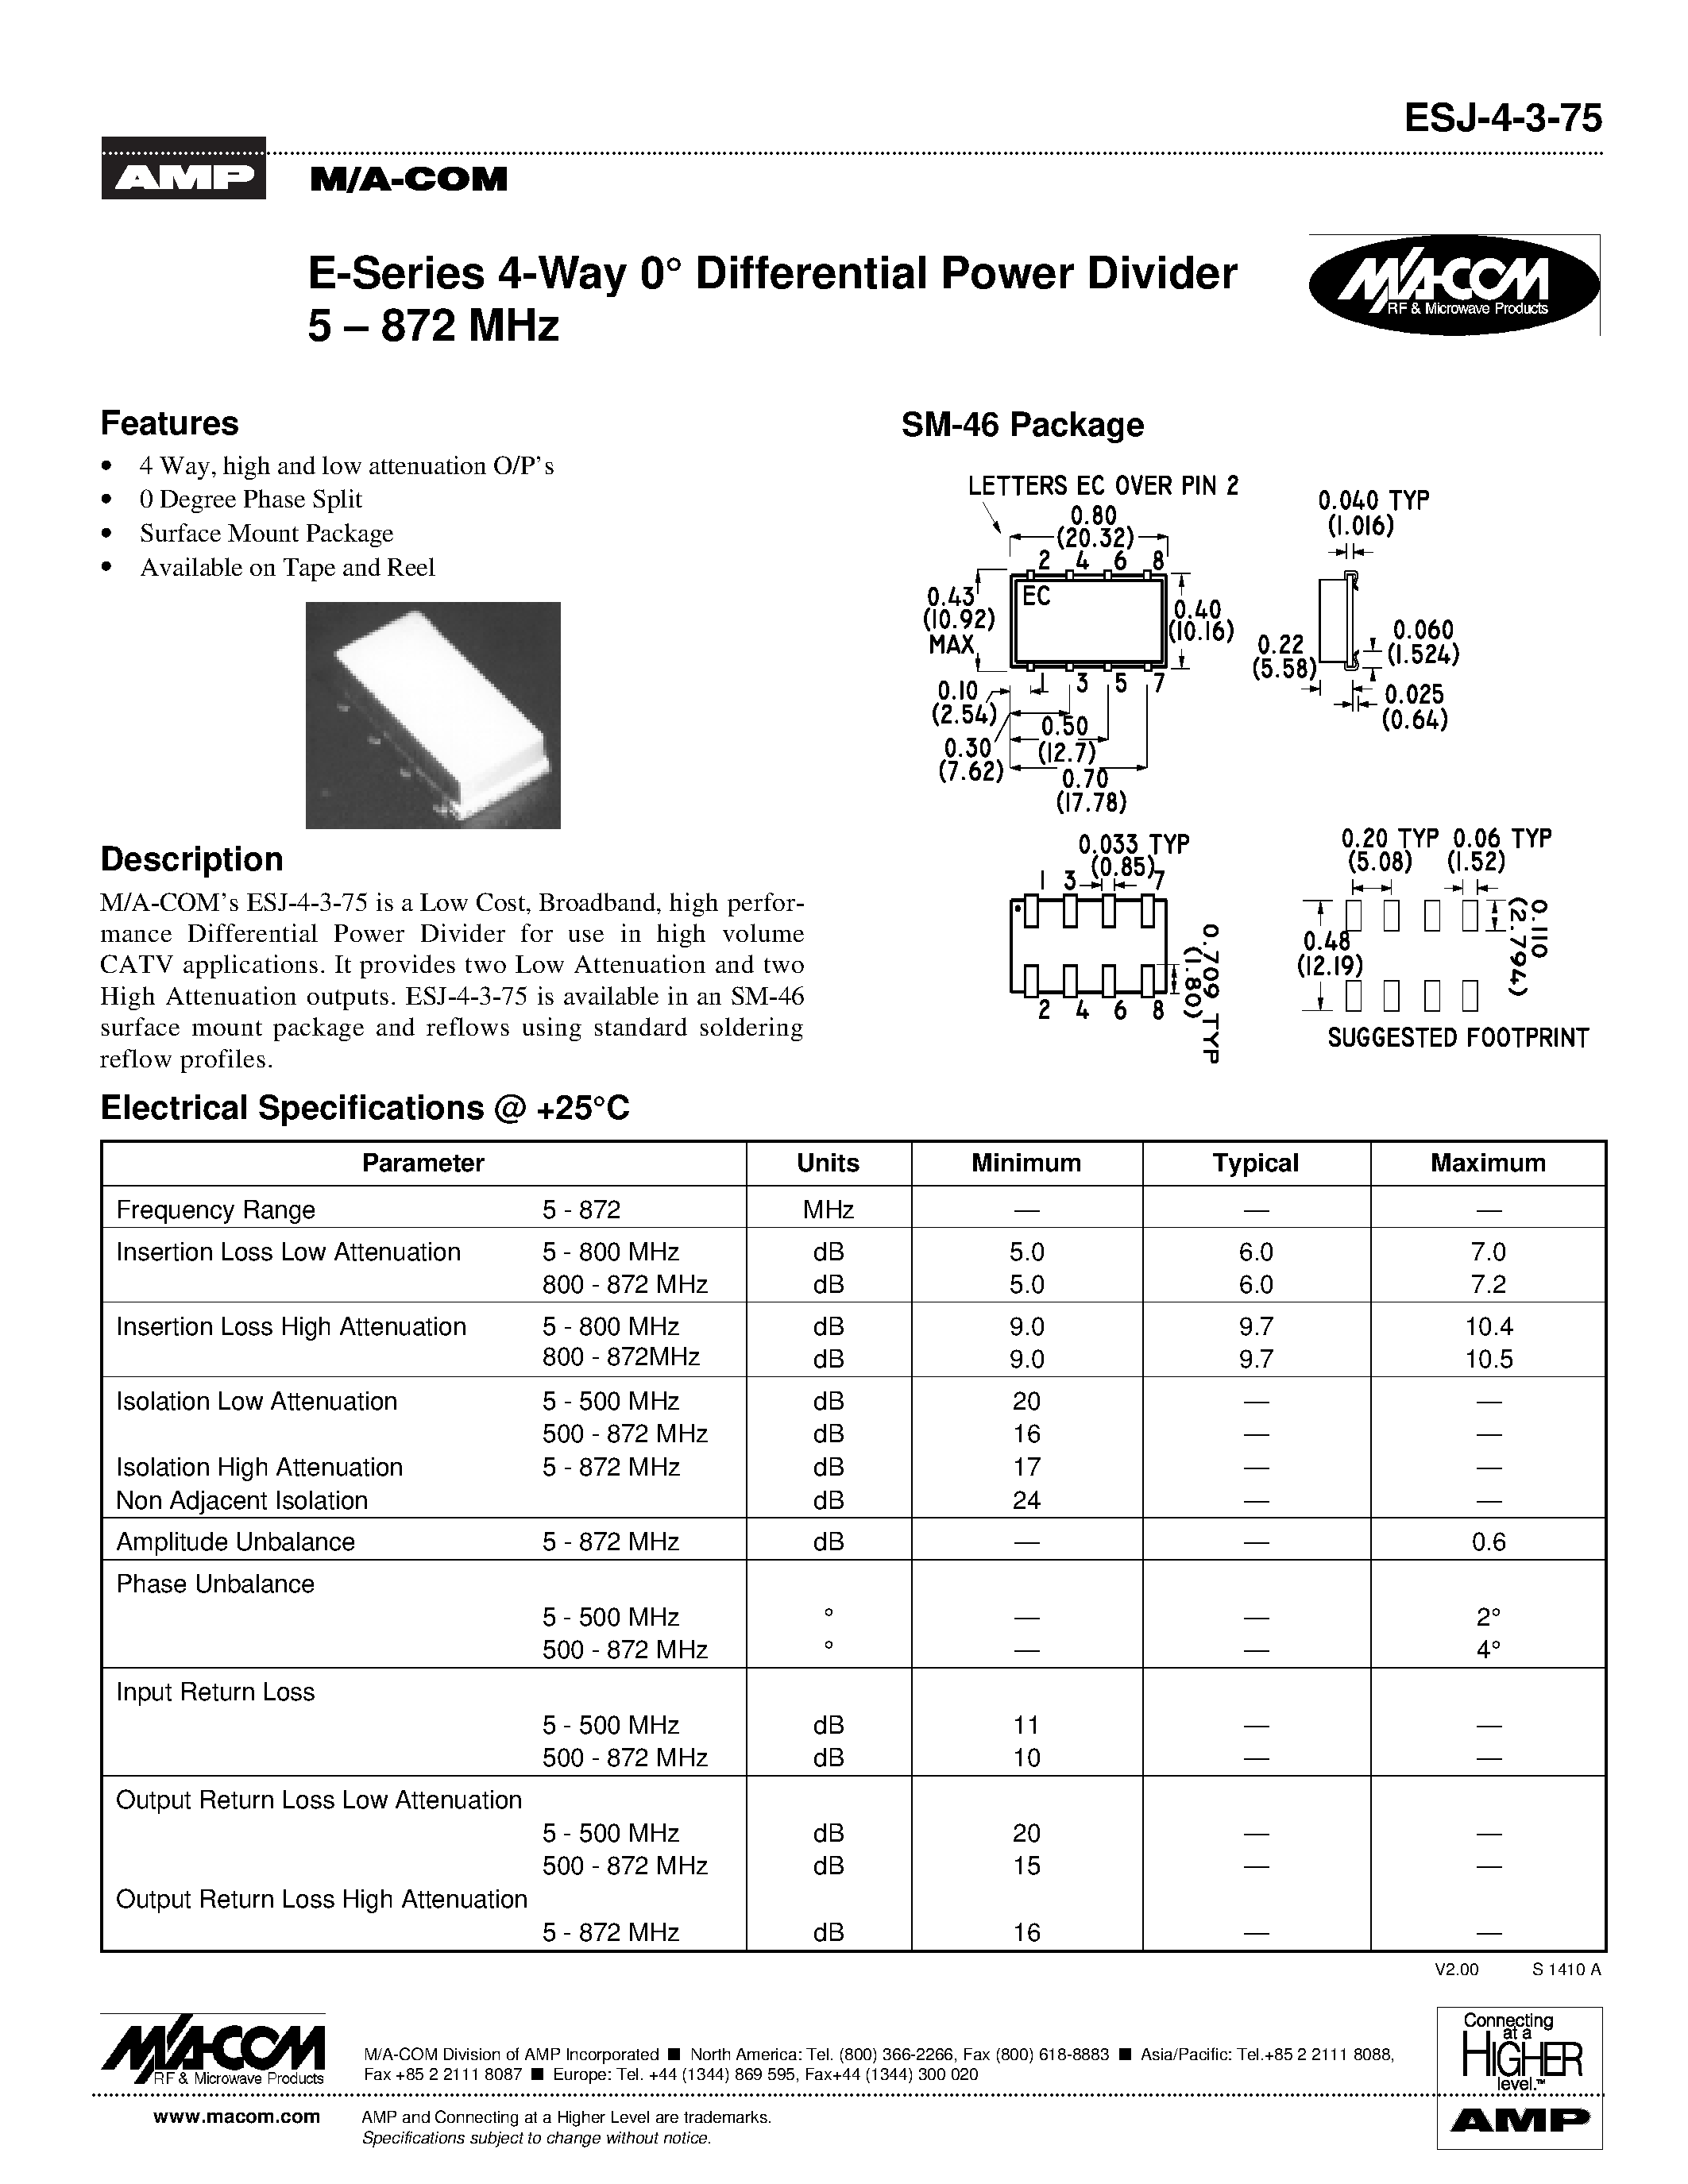 Даташит ESJ-4-3-75 - E-Series 4-Way 0 Differential Power Divider 5 - 872 MHz страница 1